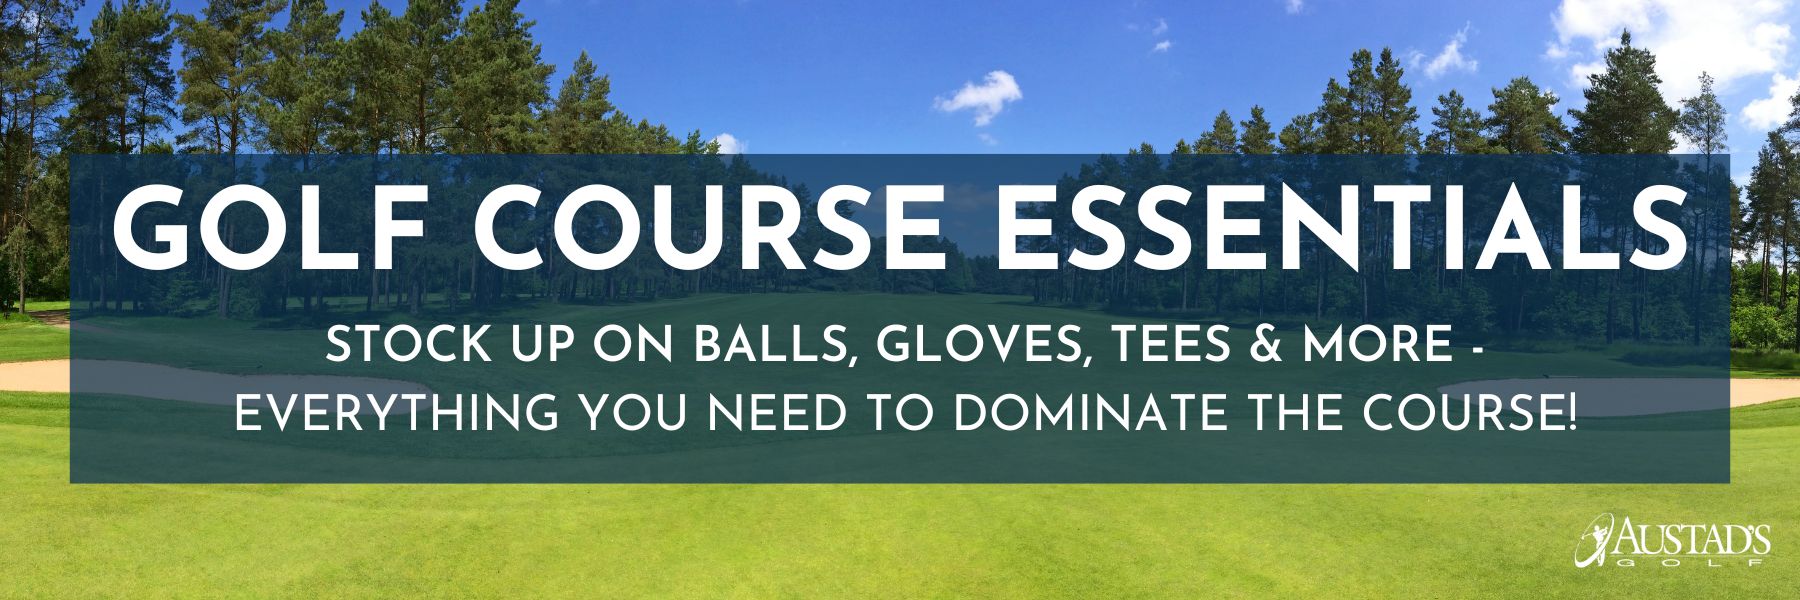 Golf course essentials